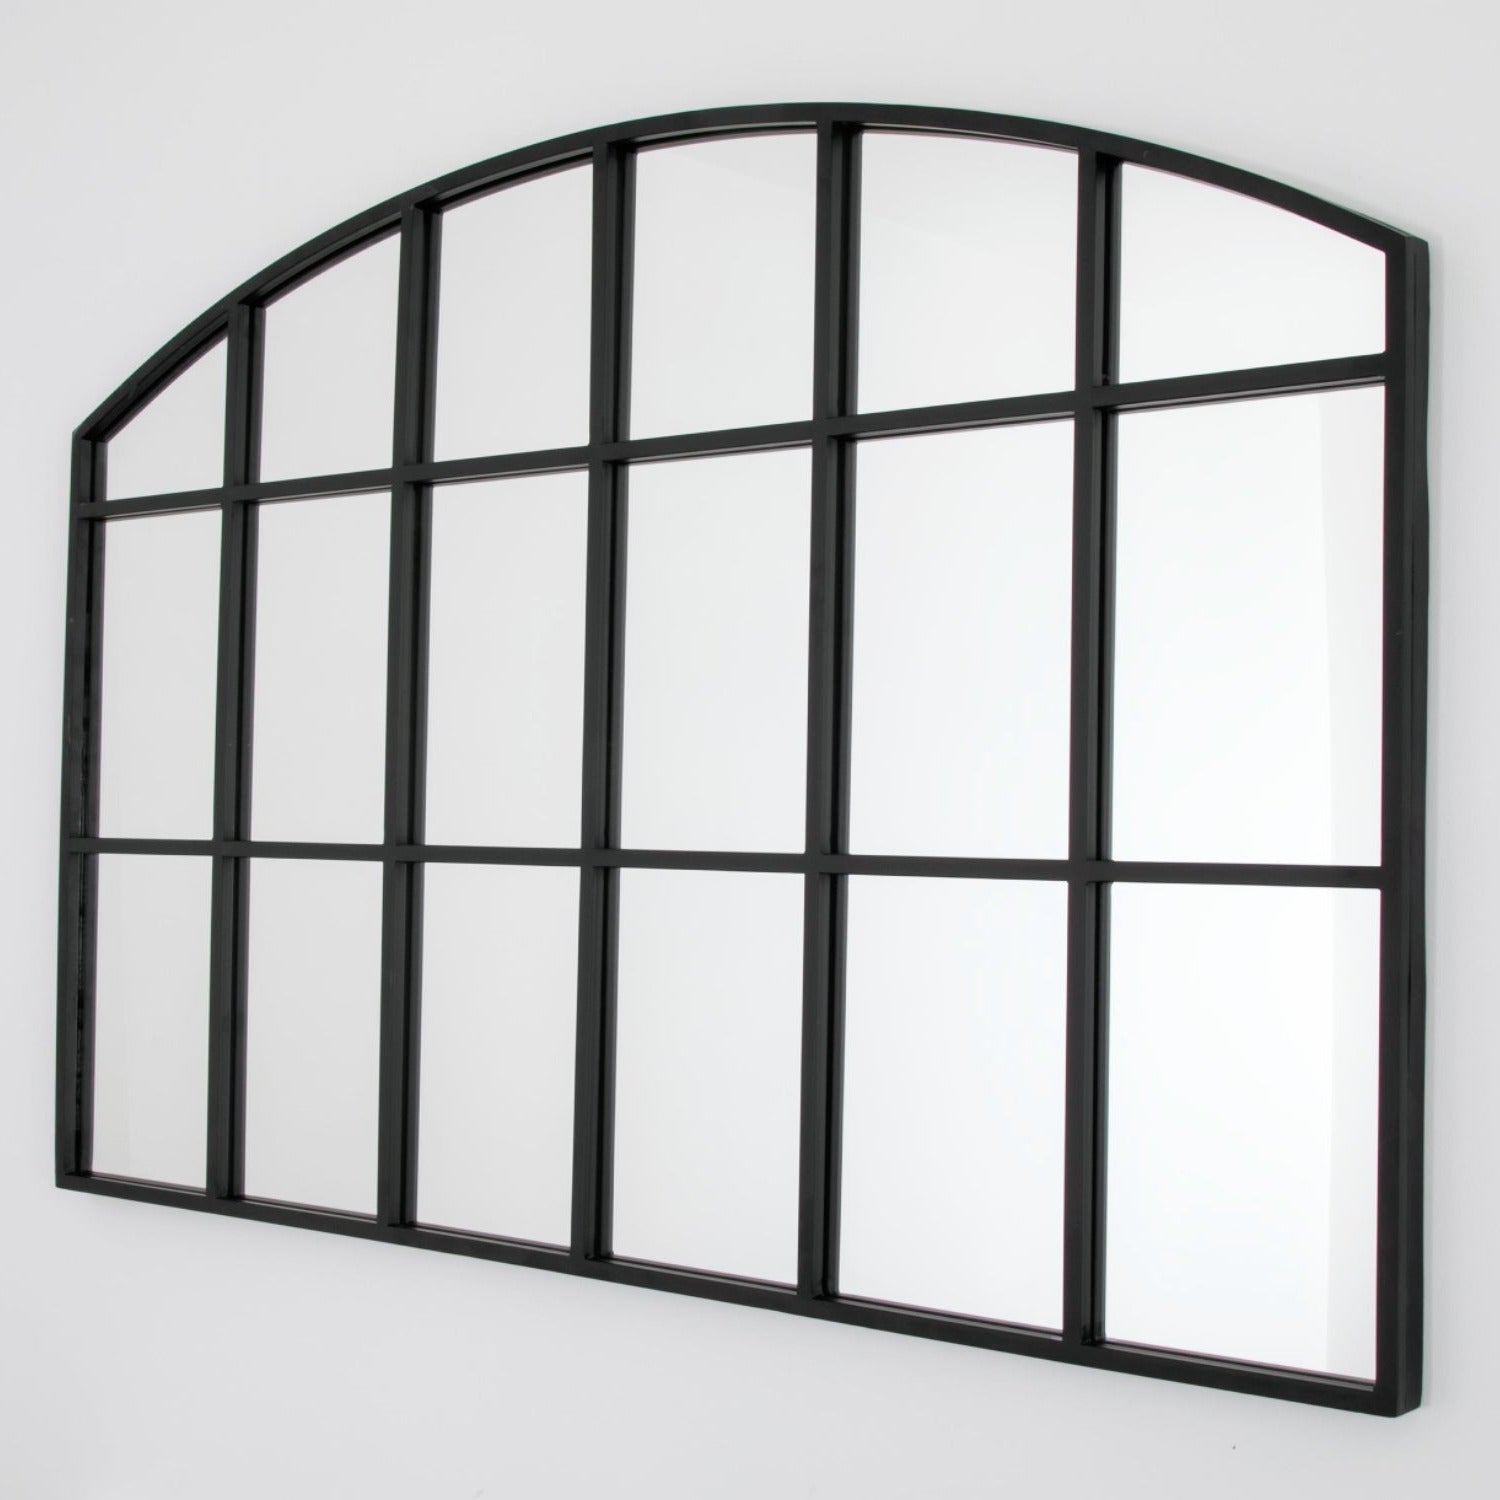 Horizontal arch mirror - black by Native